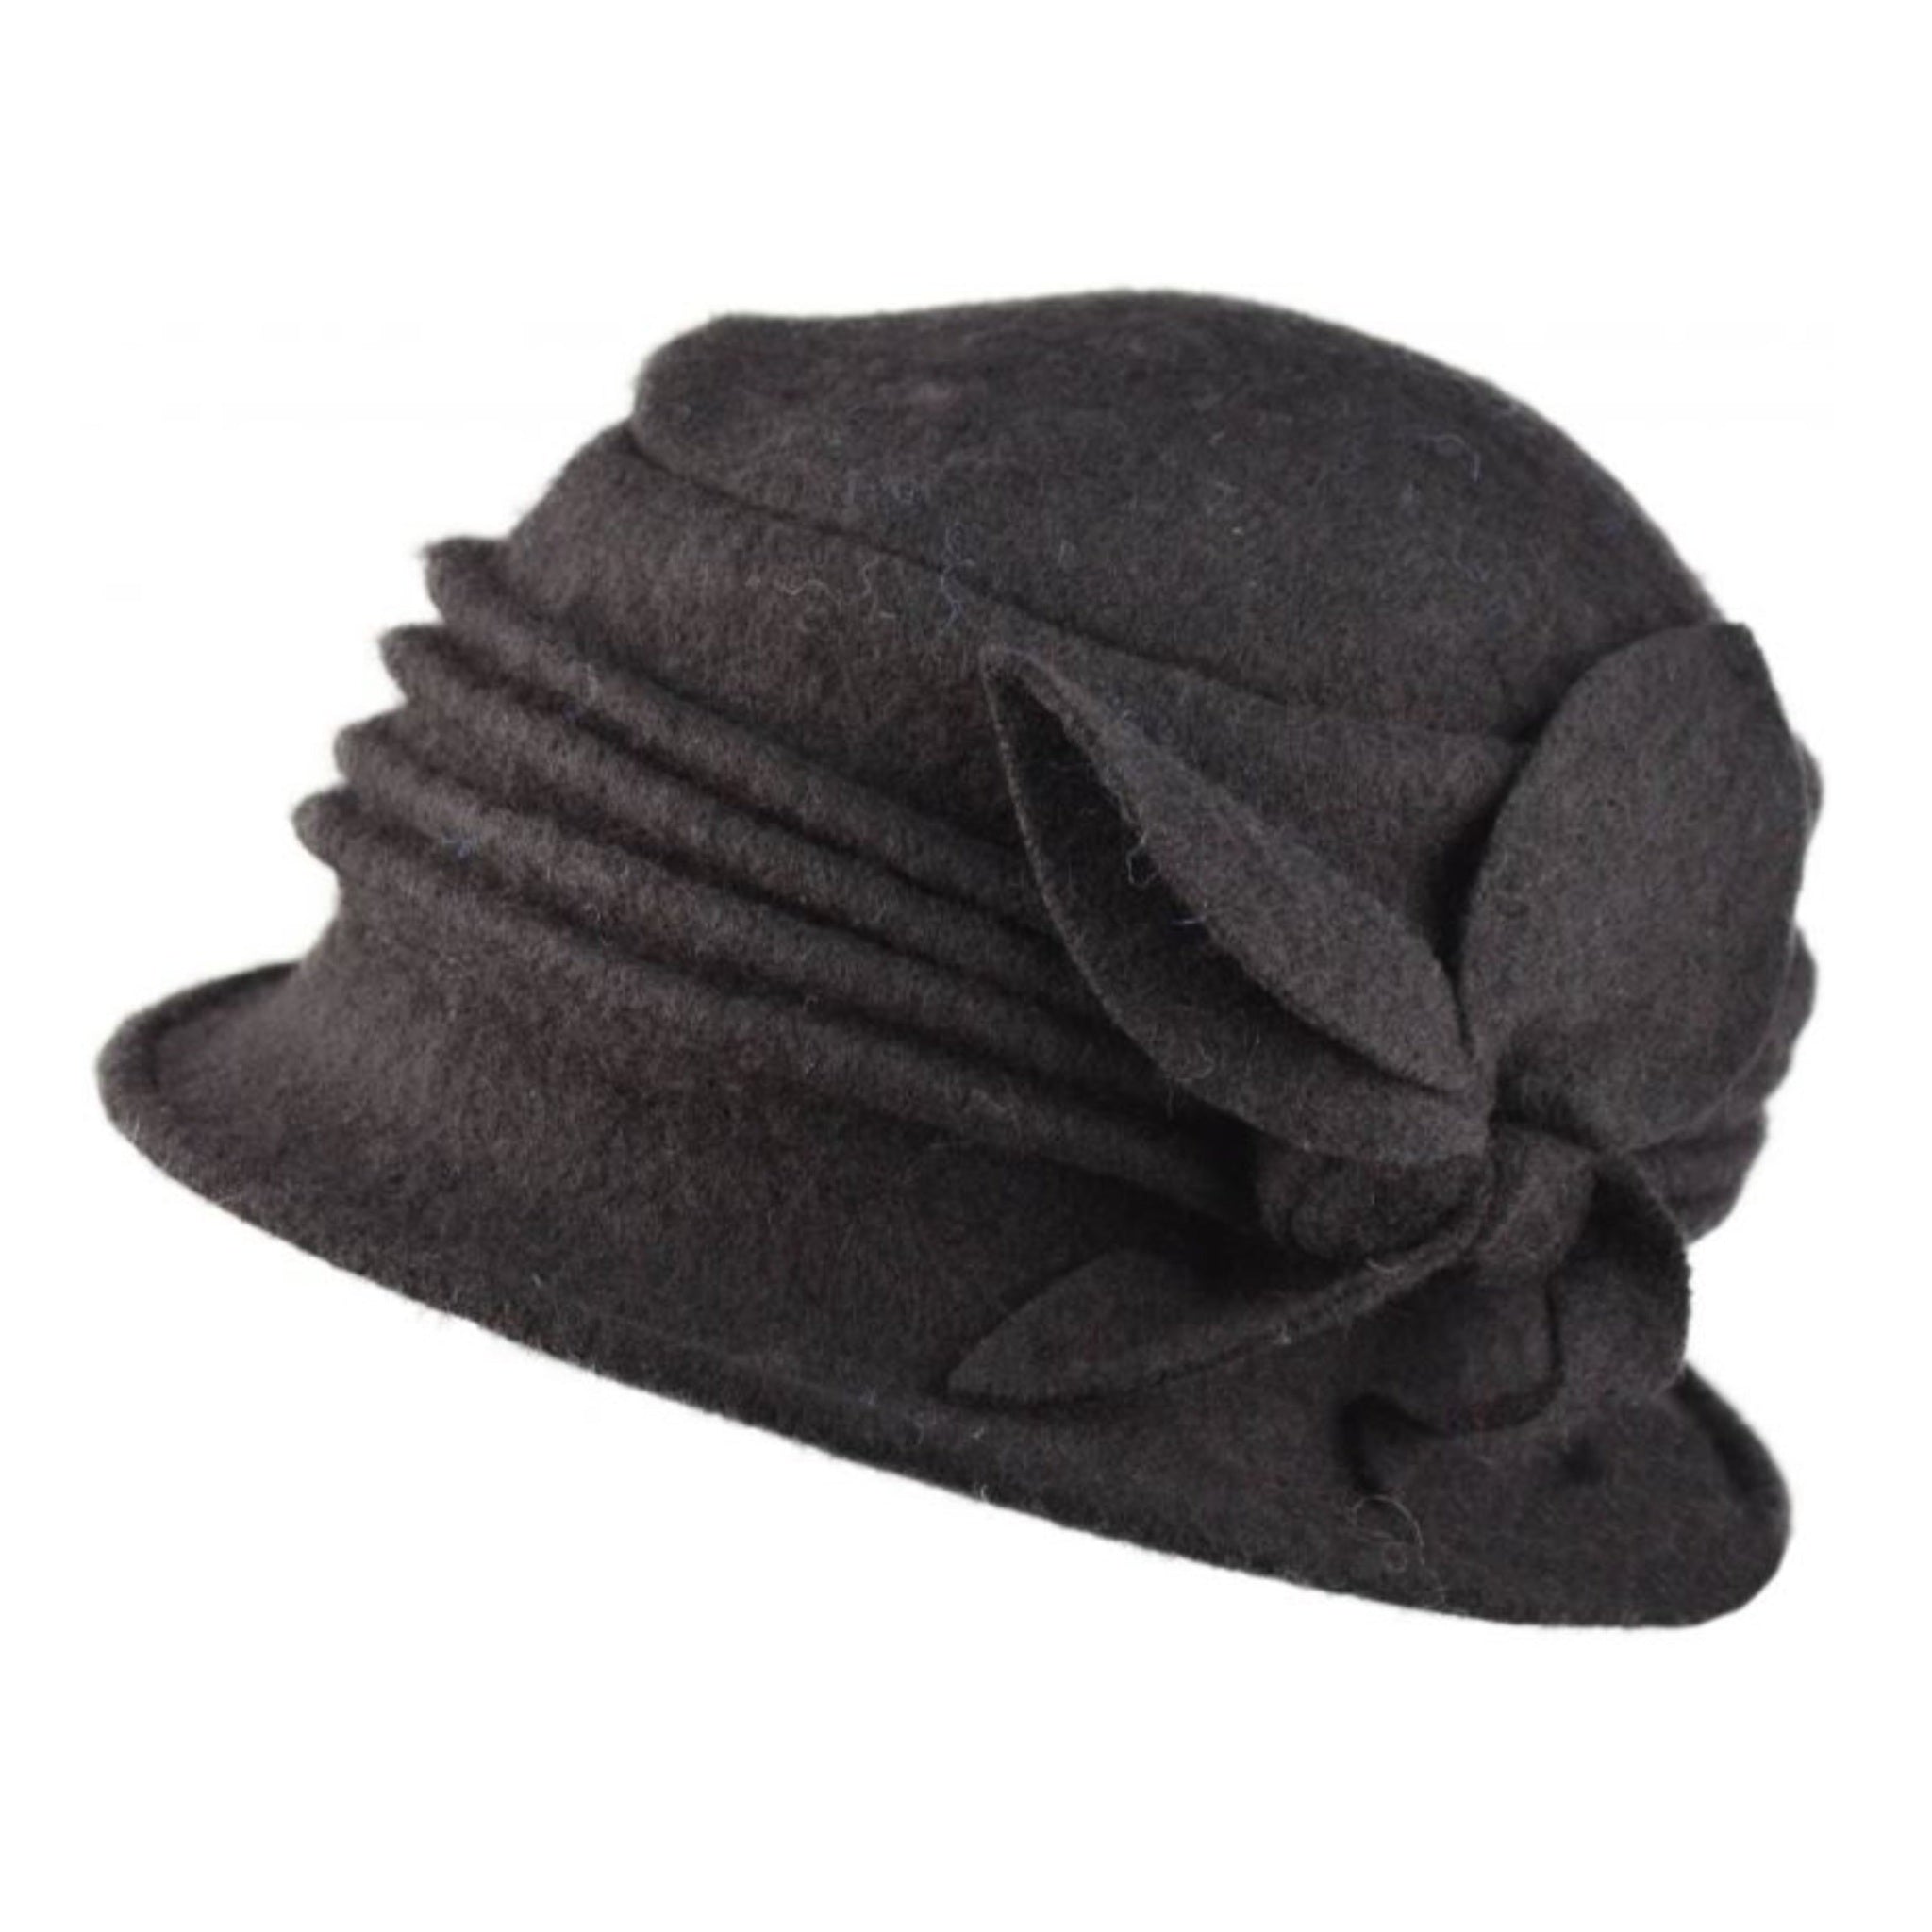 The Hat Shop Ladies 100% Wool Cloche Black